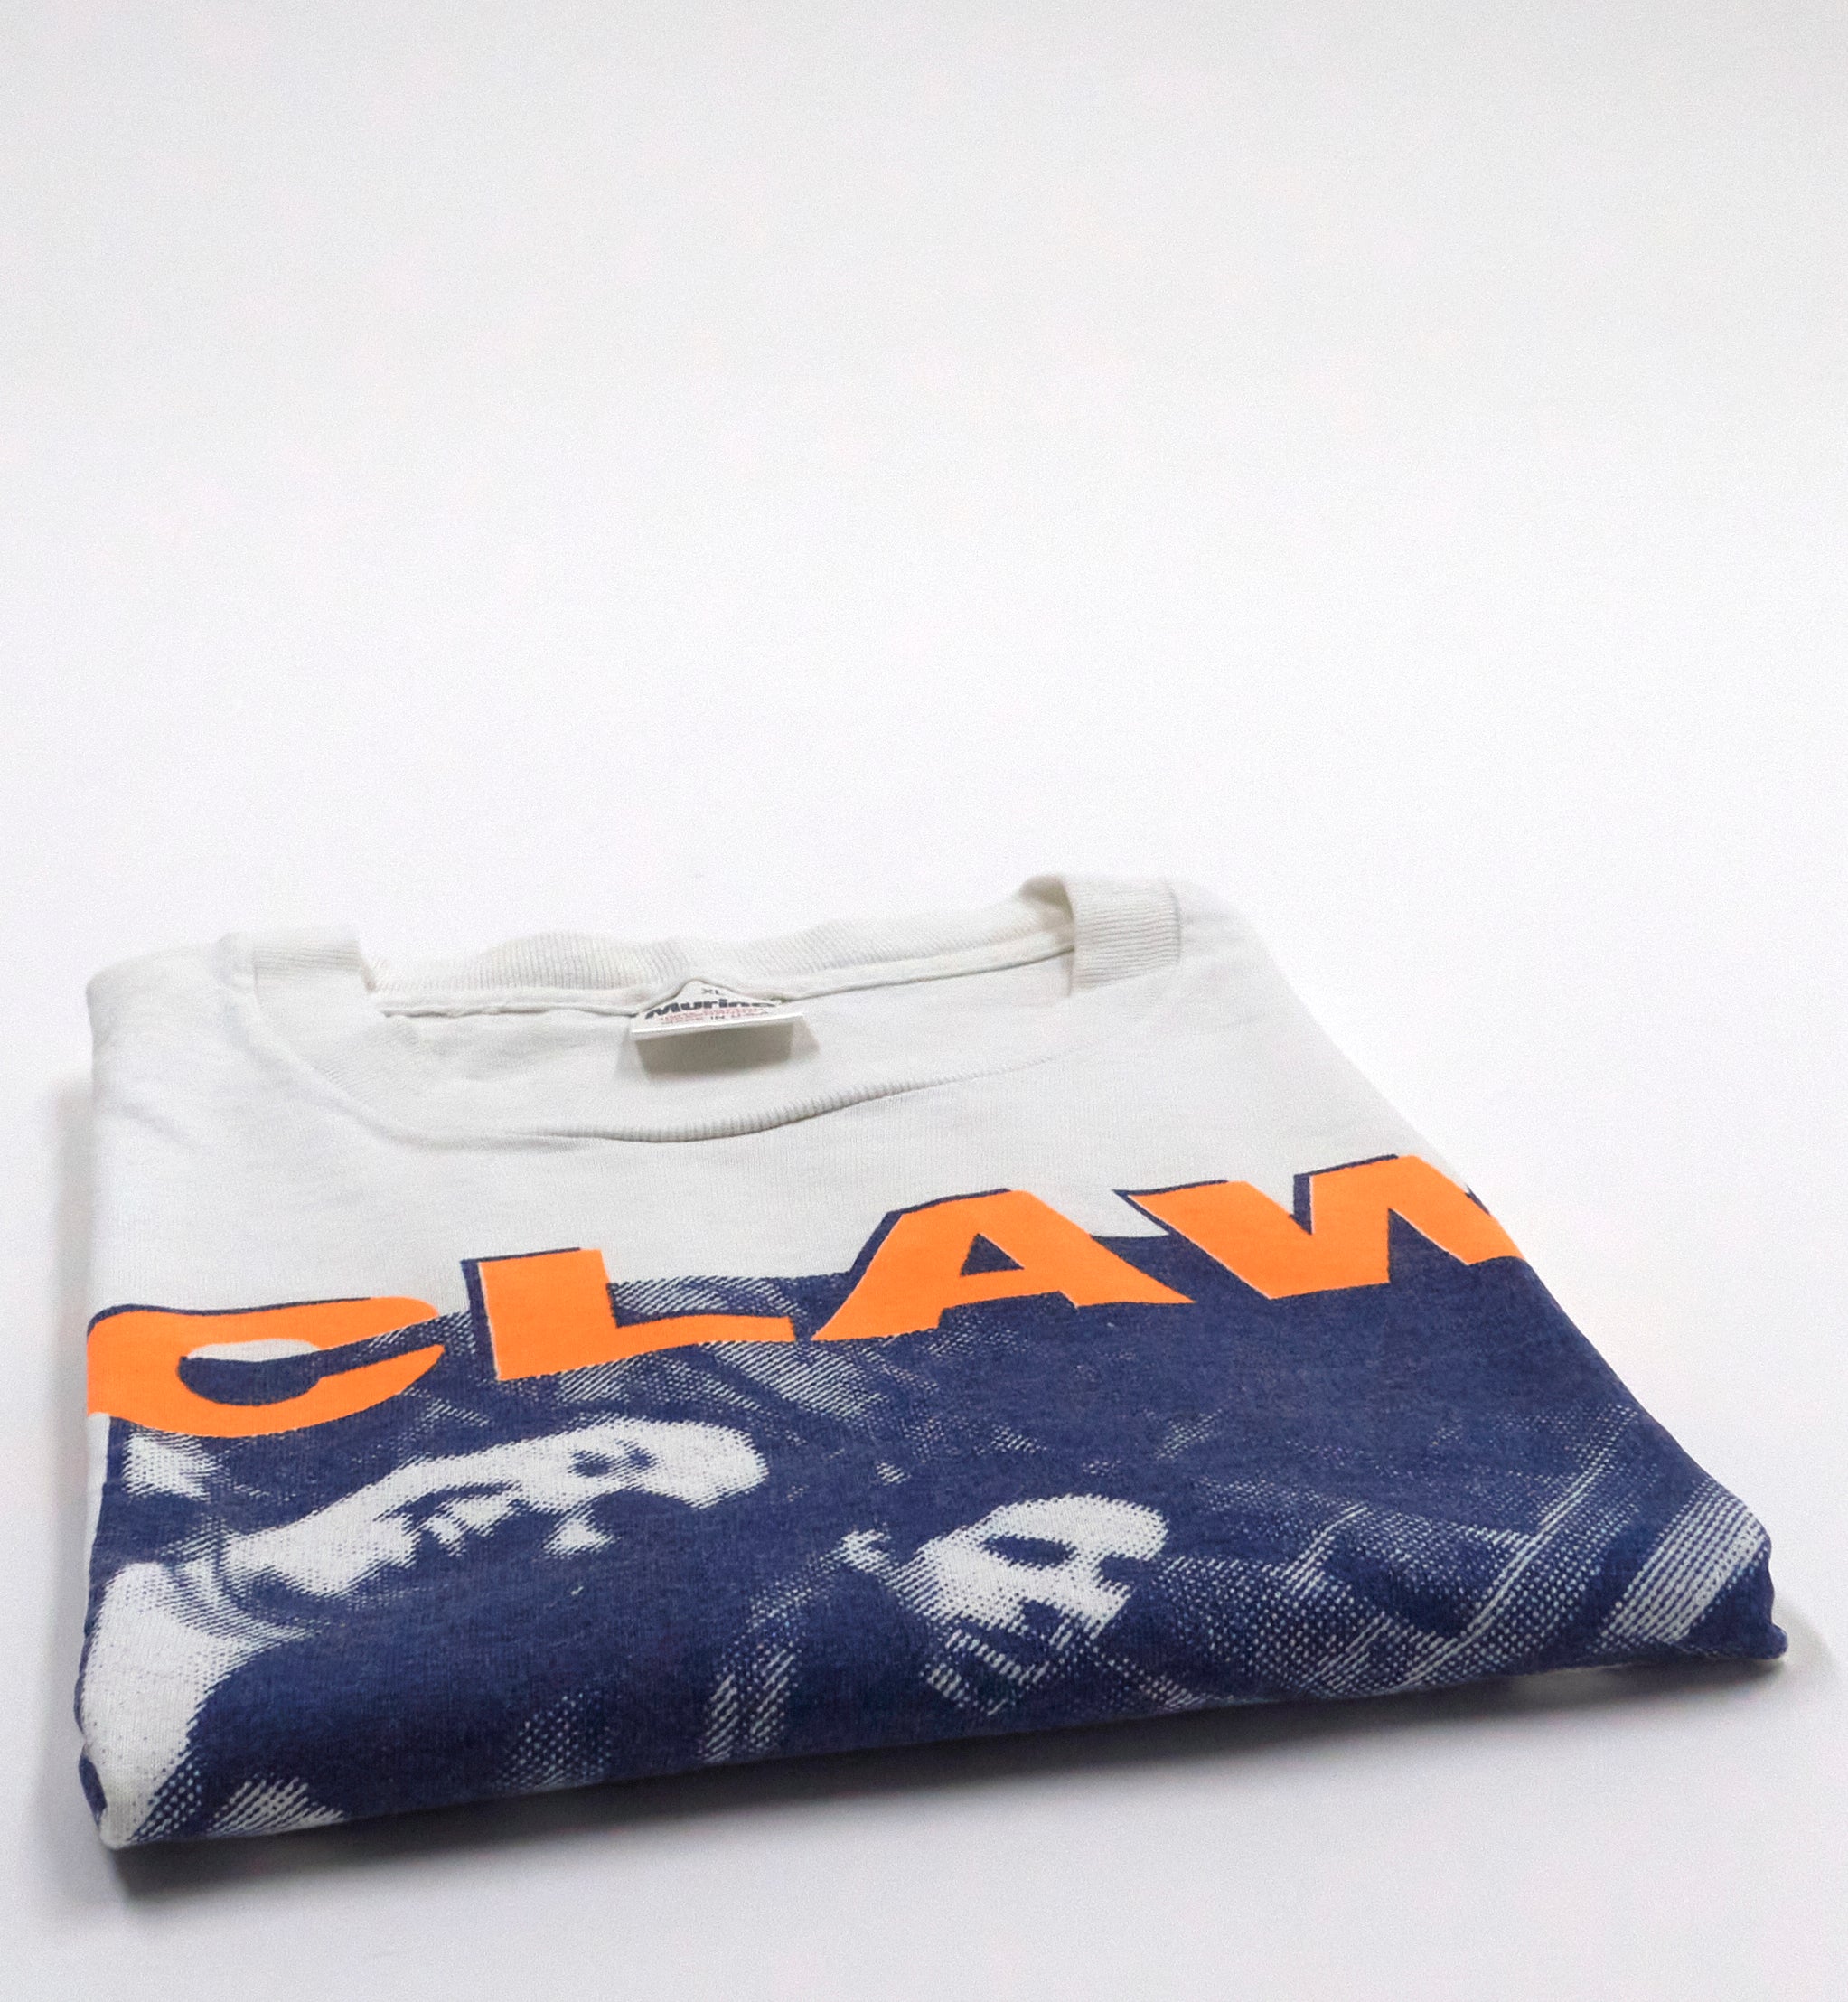 Claw Hammer – Ramwhale 1991 Tour Shirt Size XL